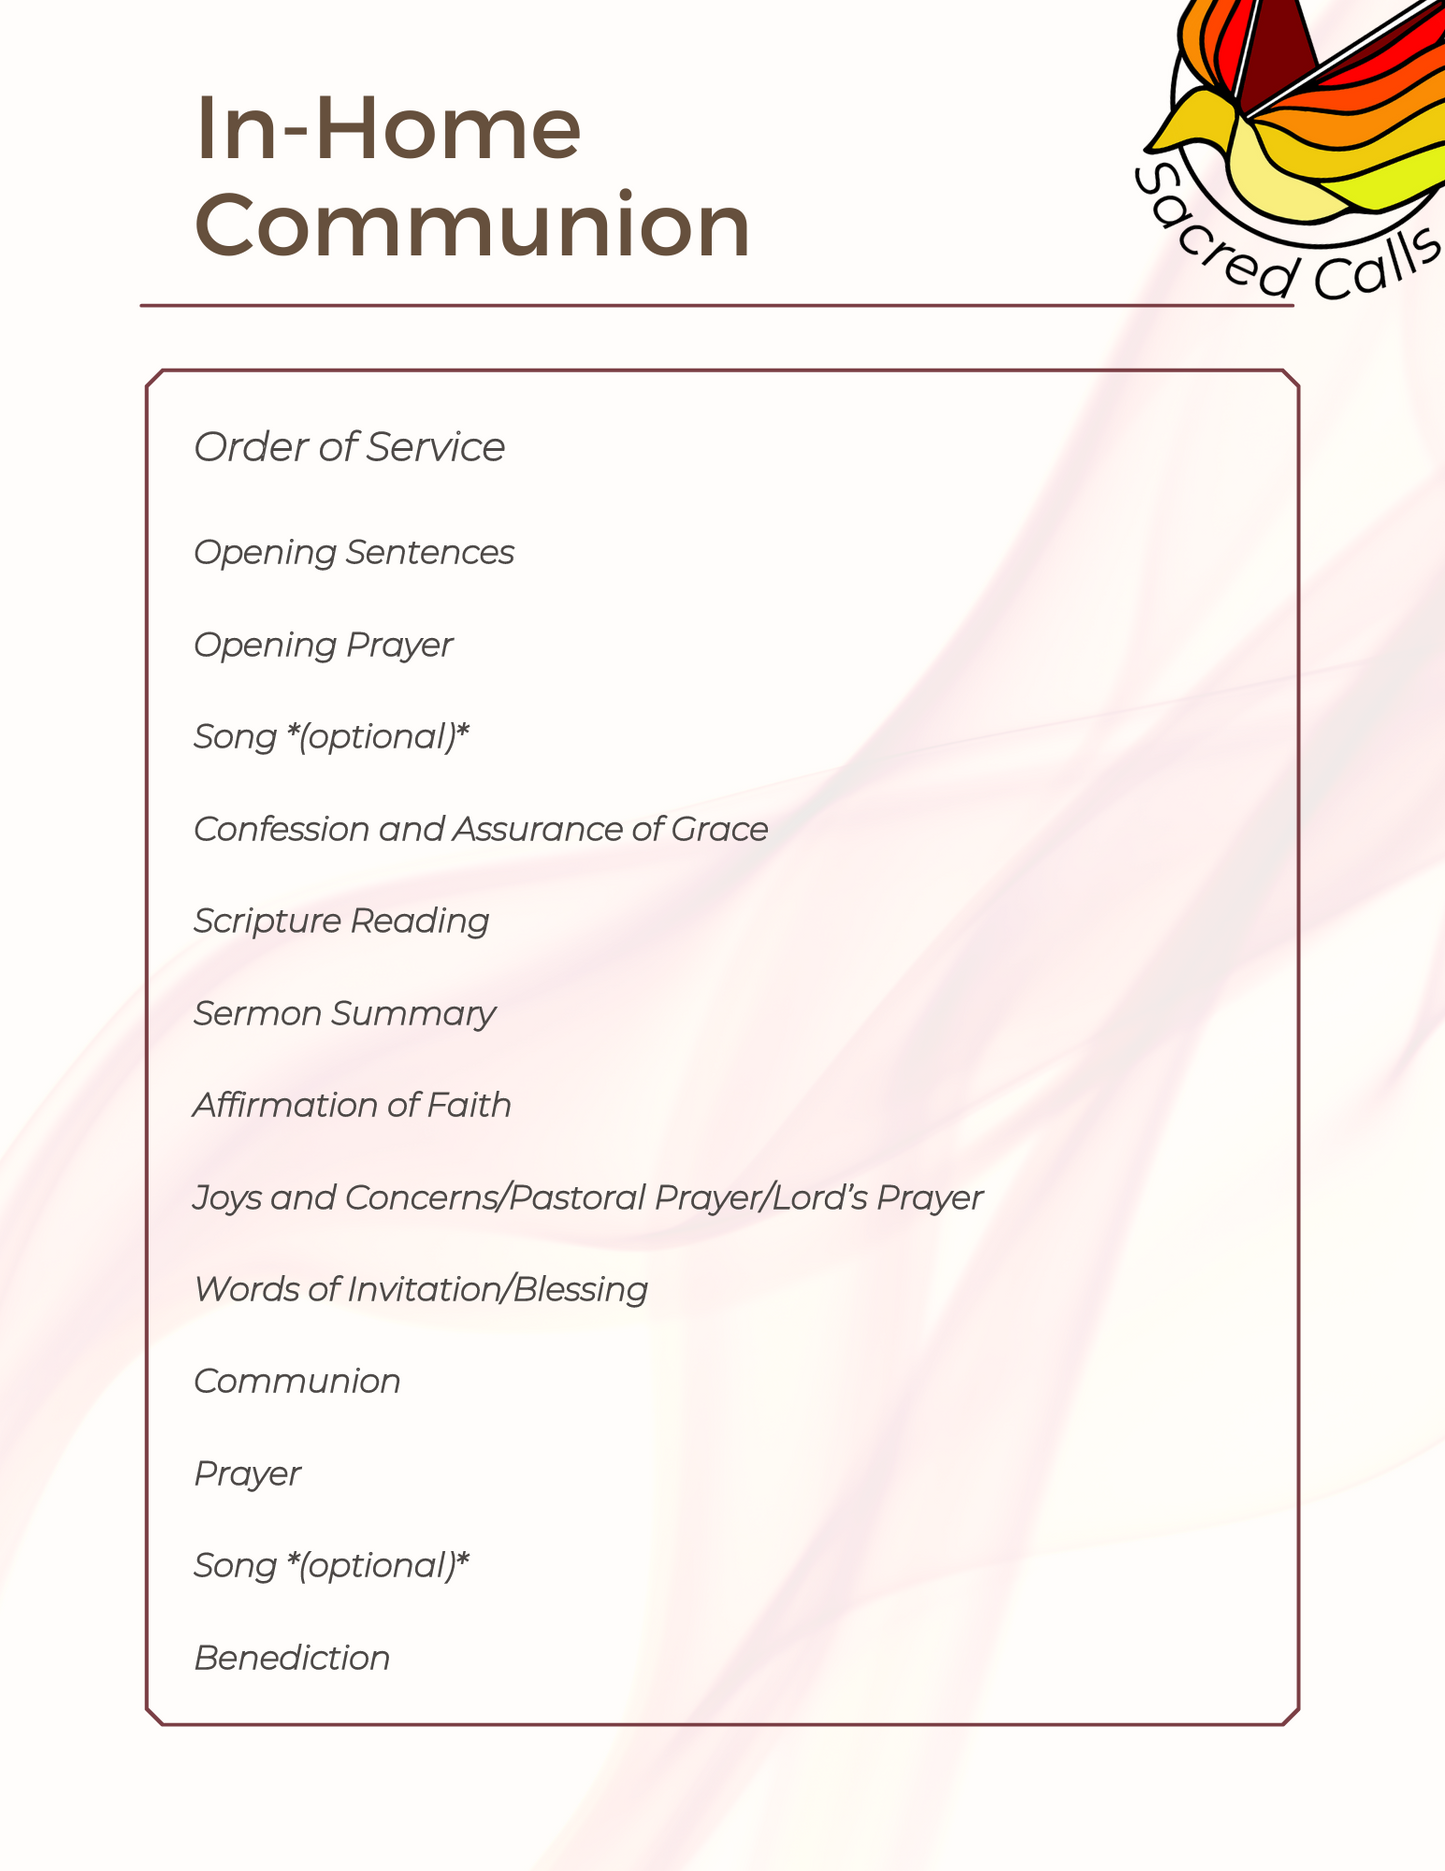 In-Home Communion Guide